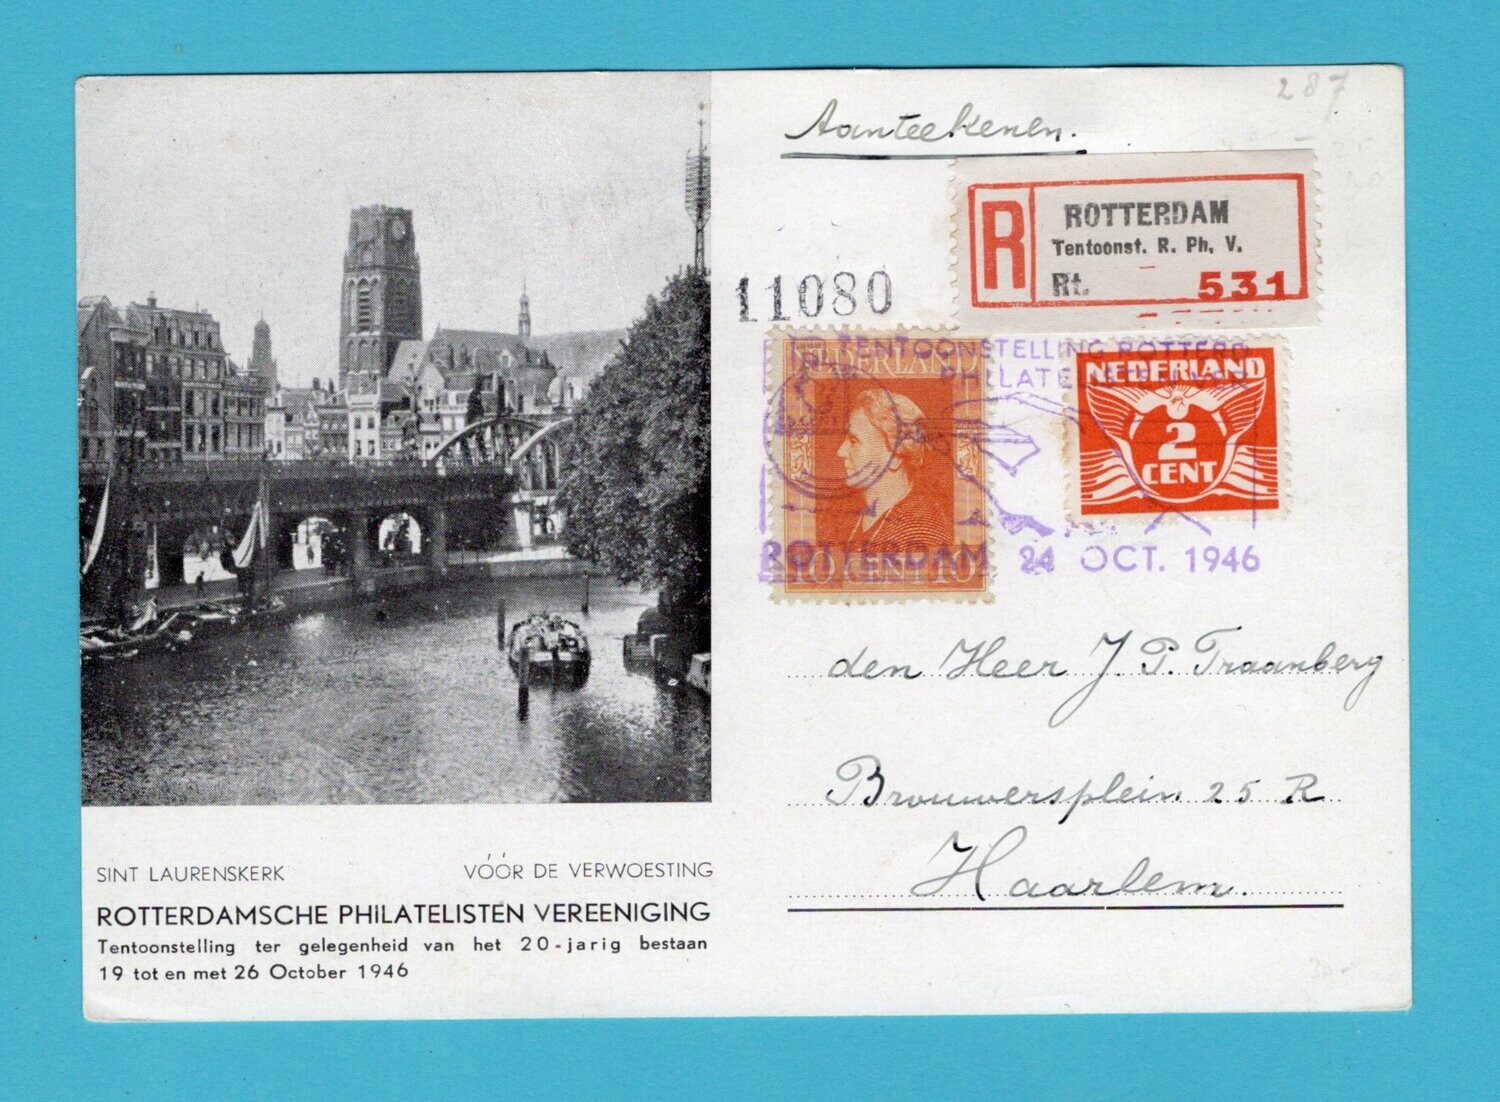 NEDERLAND R kaart 1946 Rotterdam Tentoonst. R. Ph. V. +bewijs